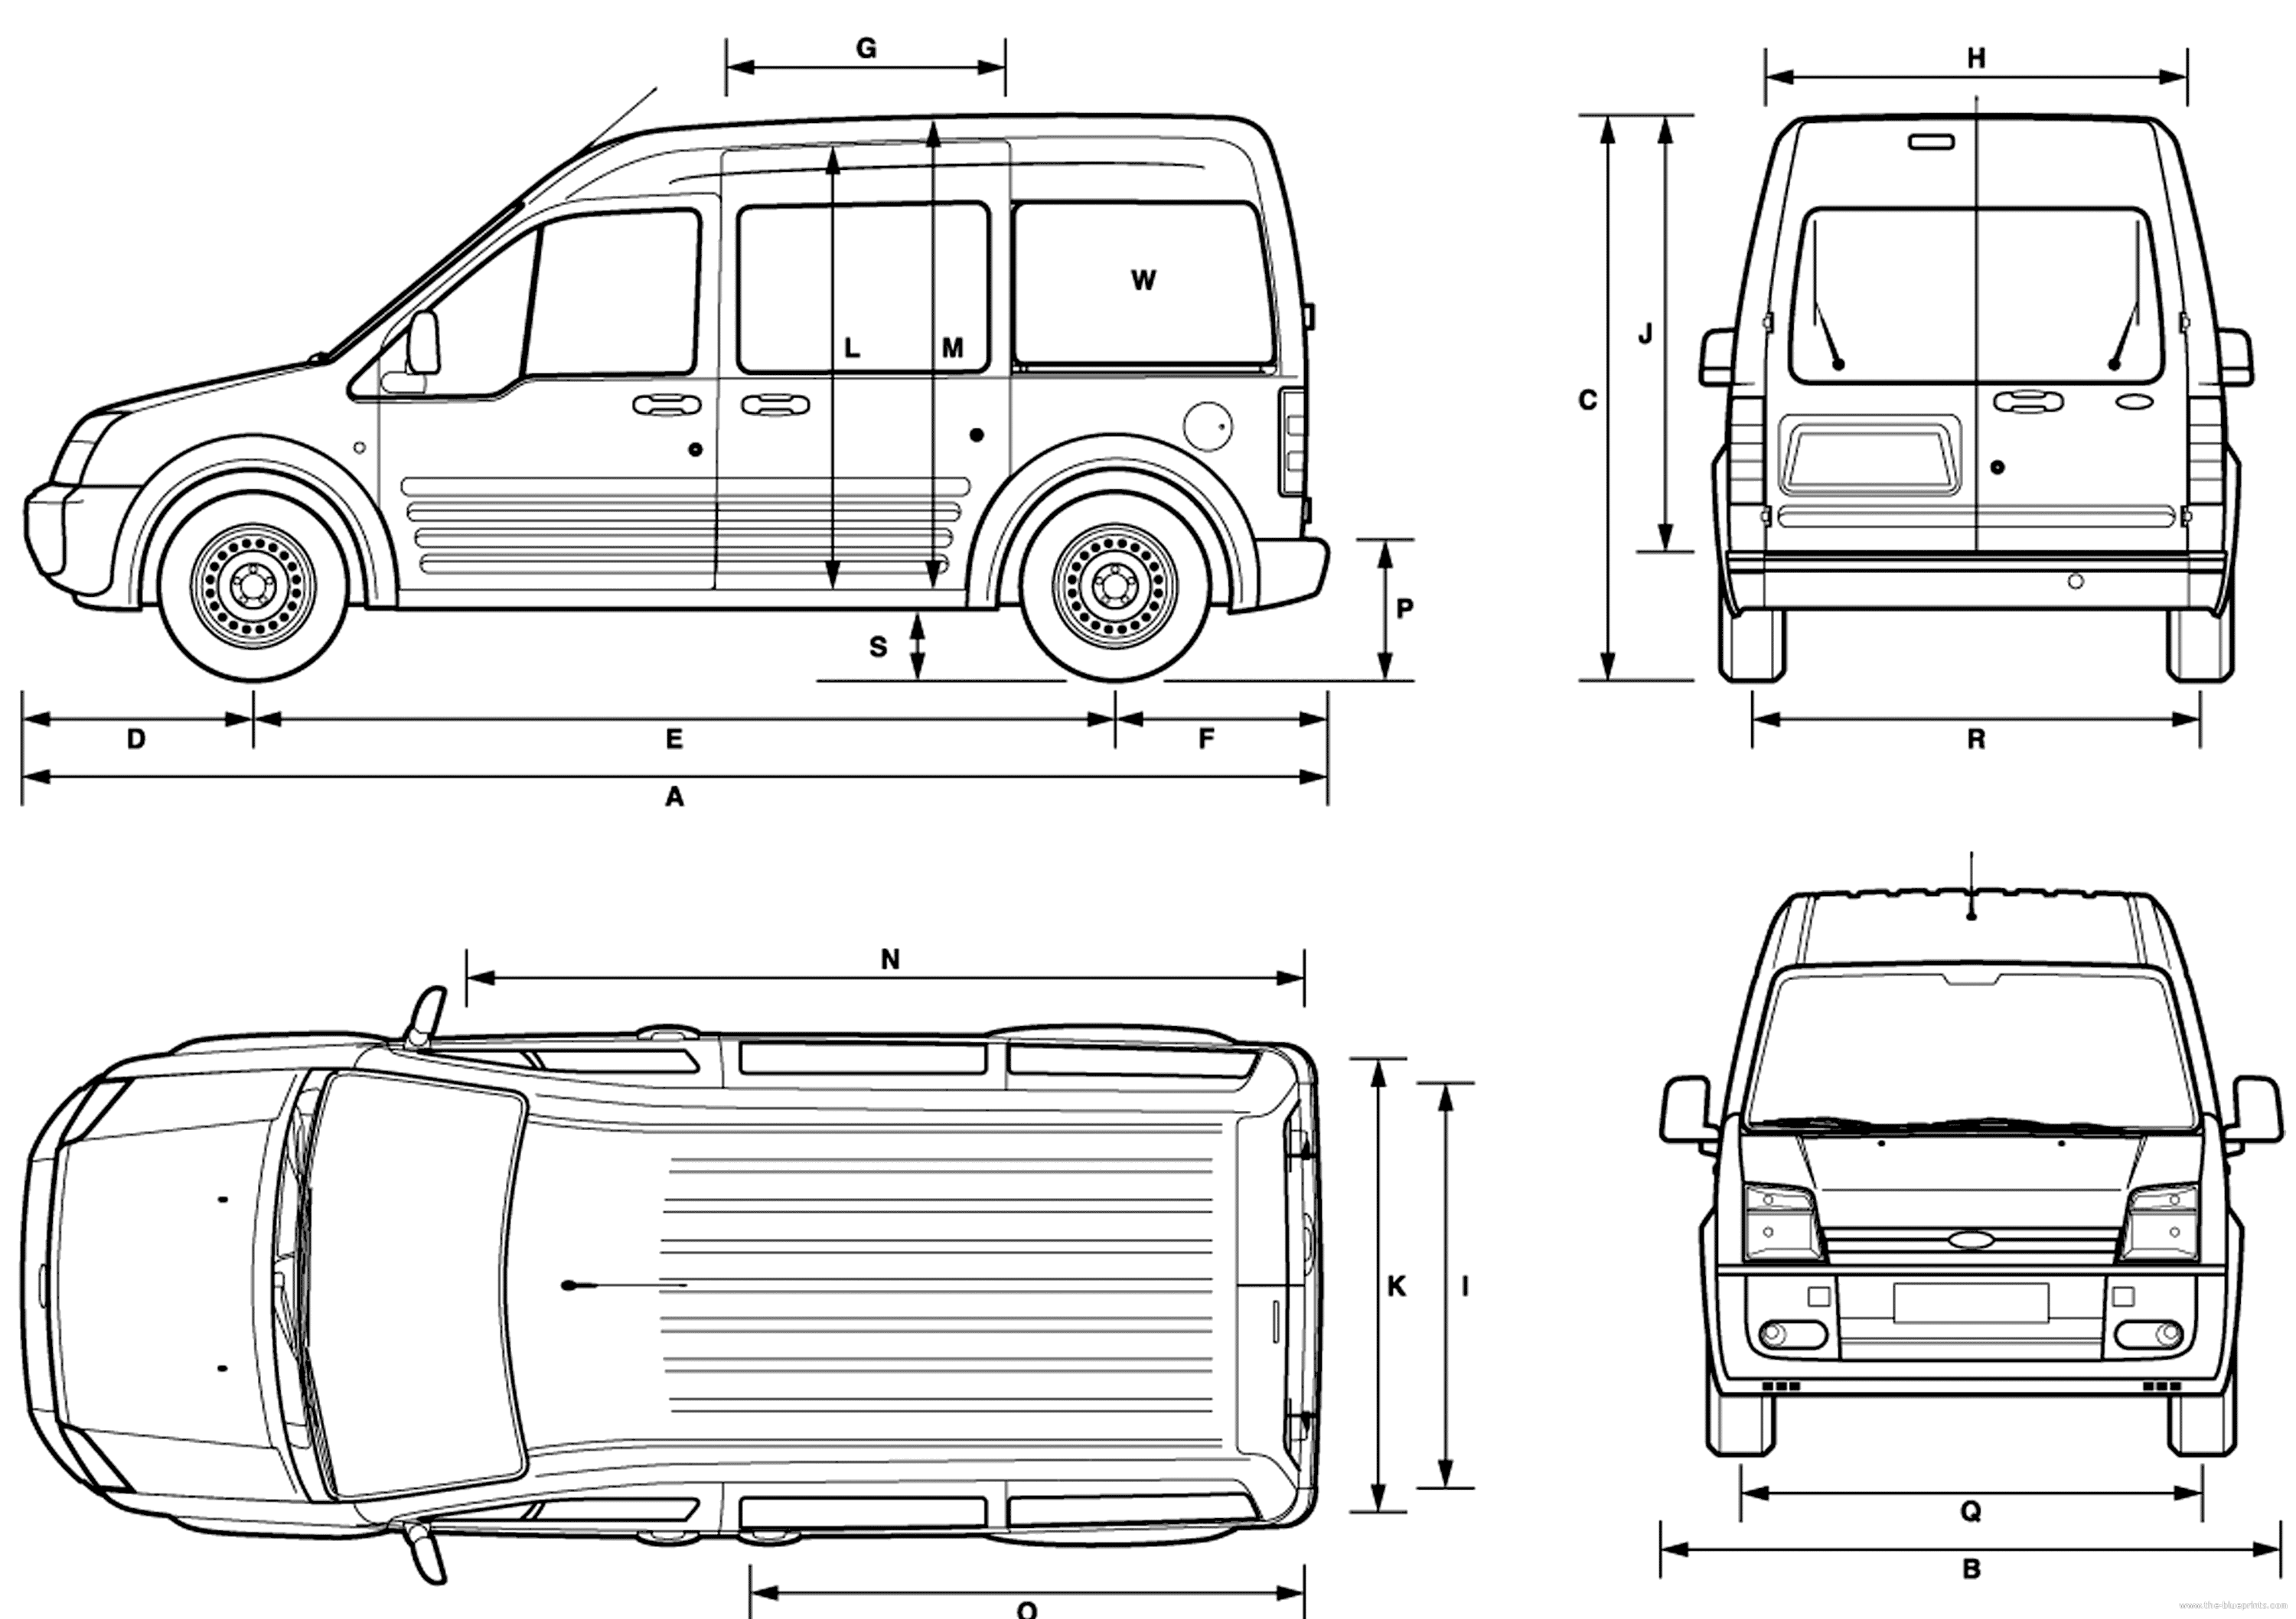 Ford transit connect dimensioni interne